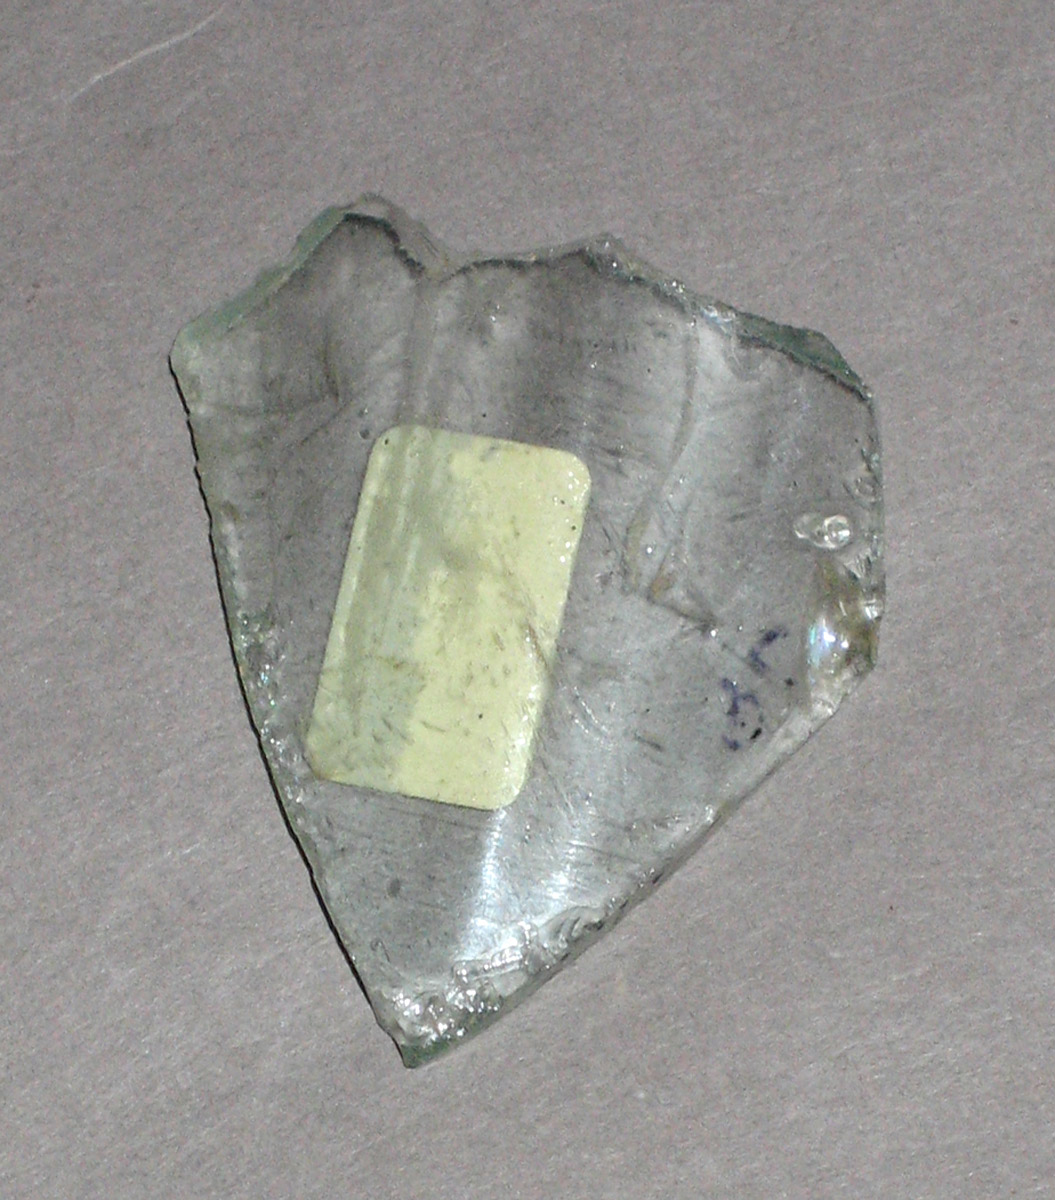 1976.0524.007 Glass fragment